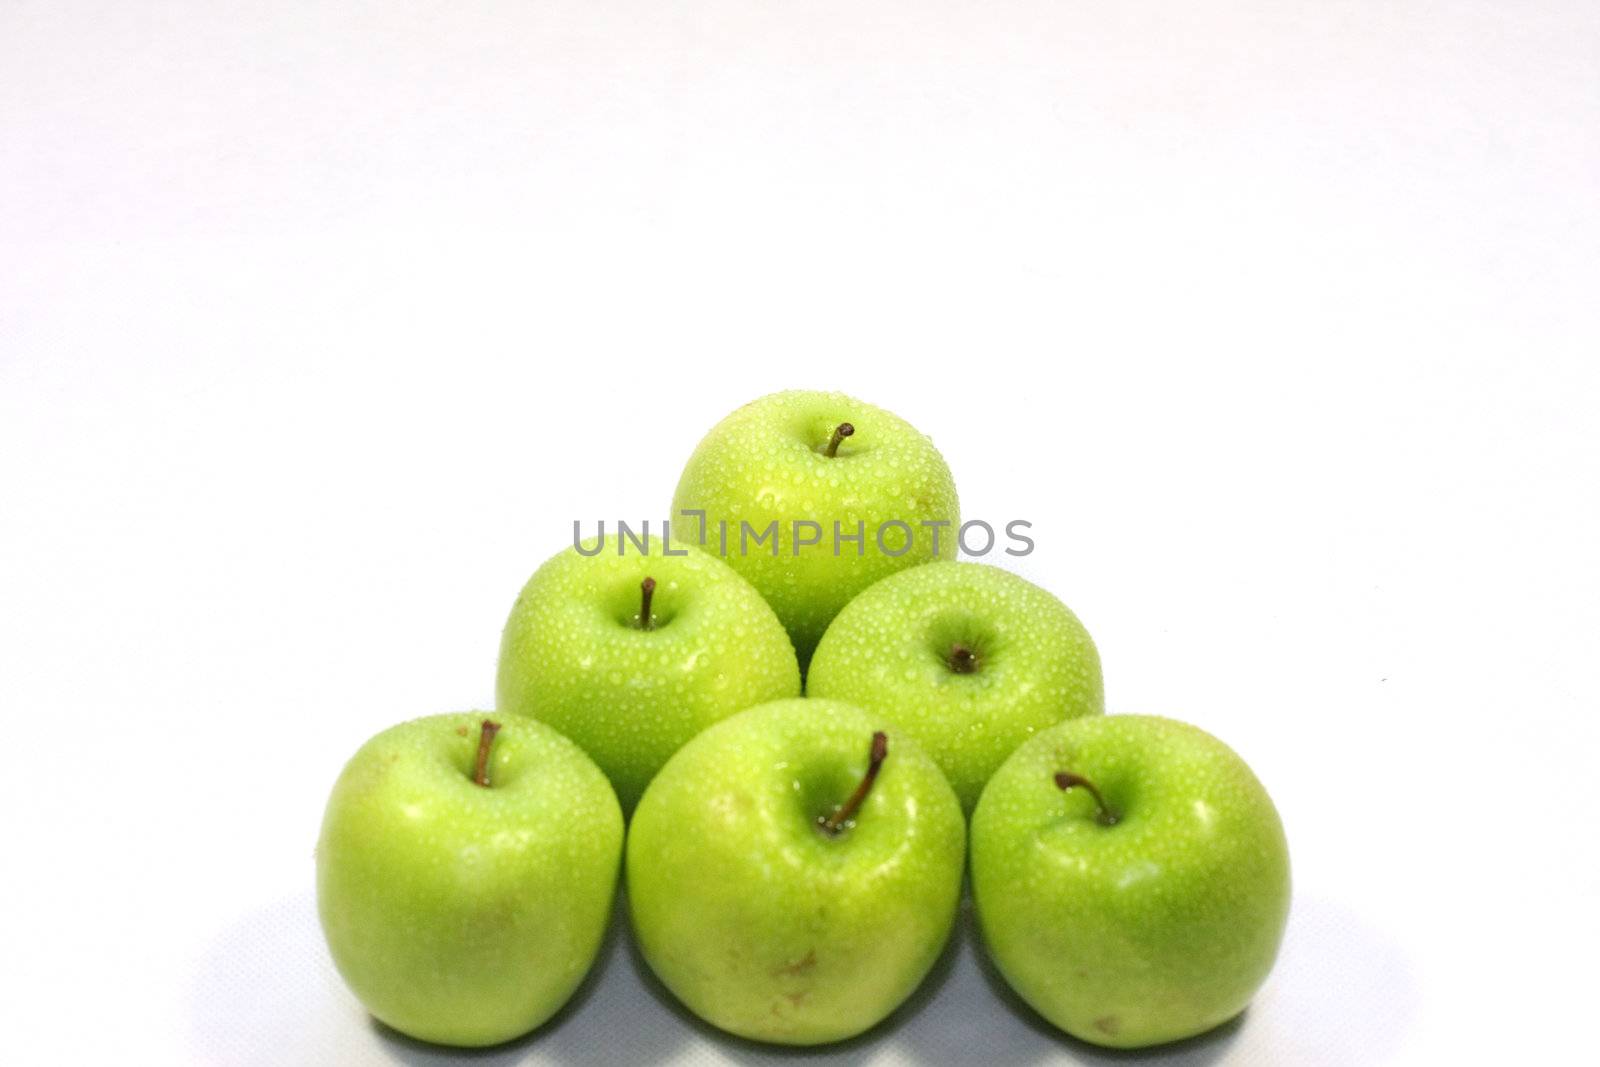 Apples by fedlog